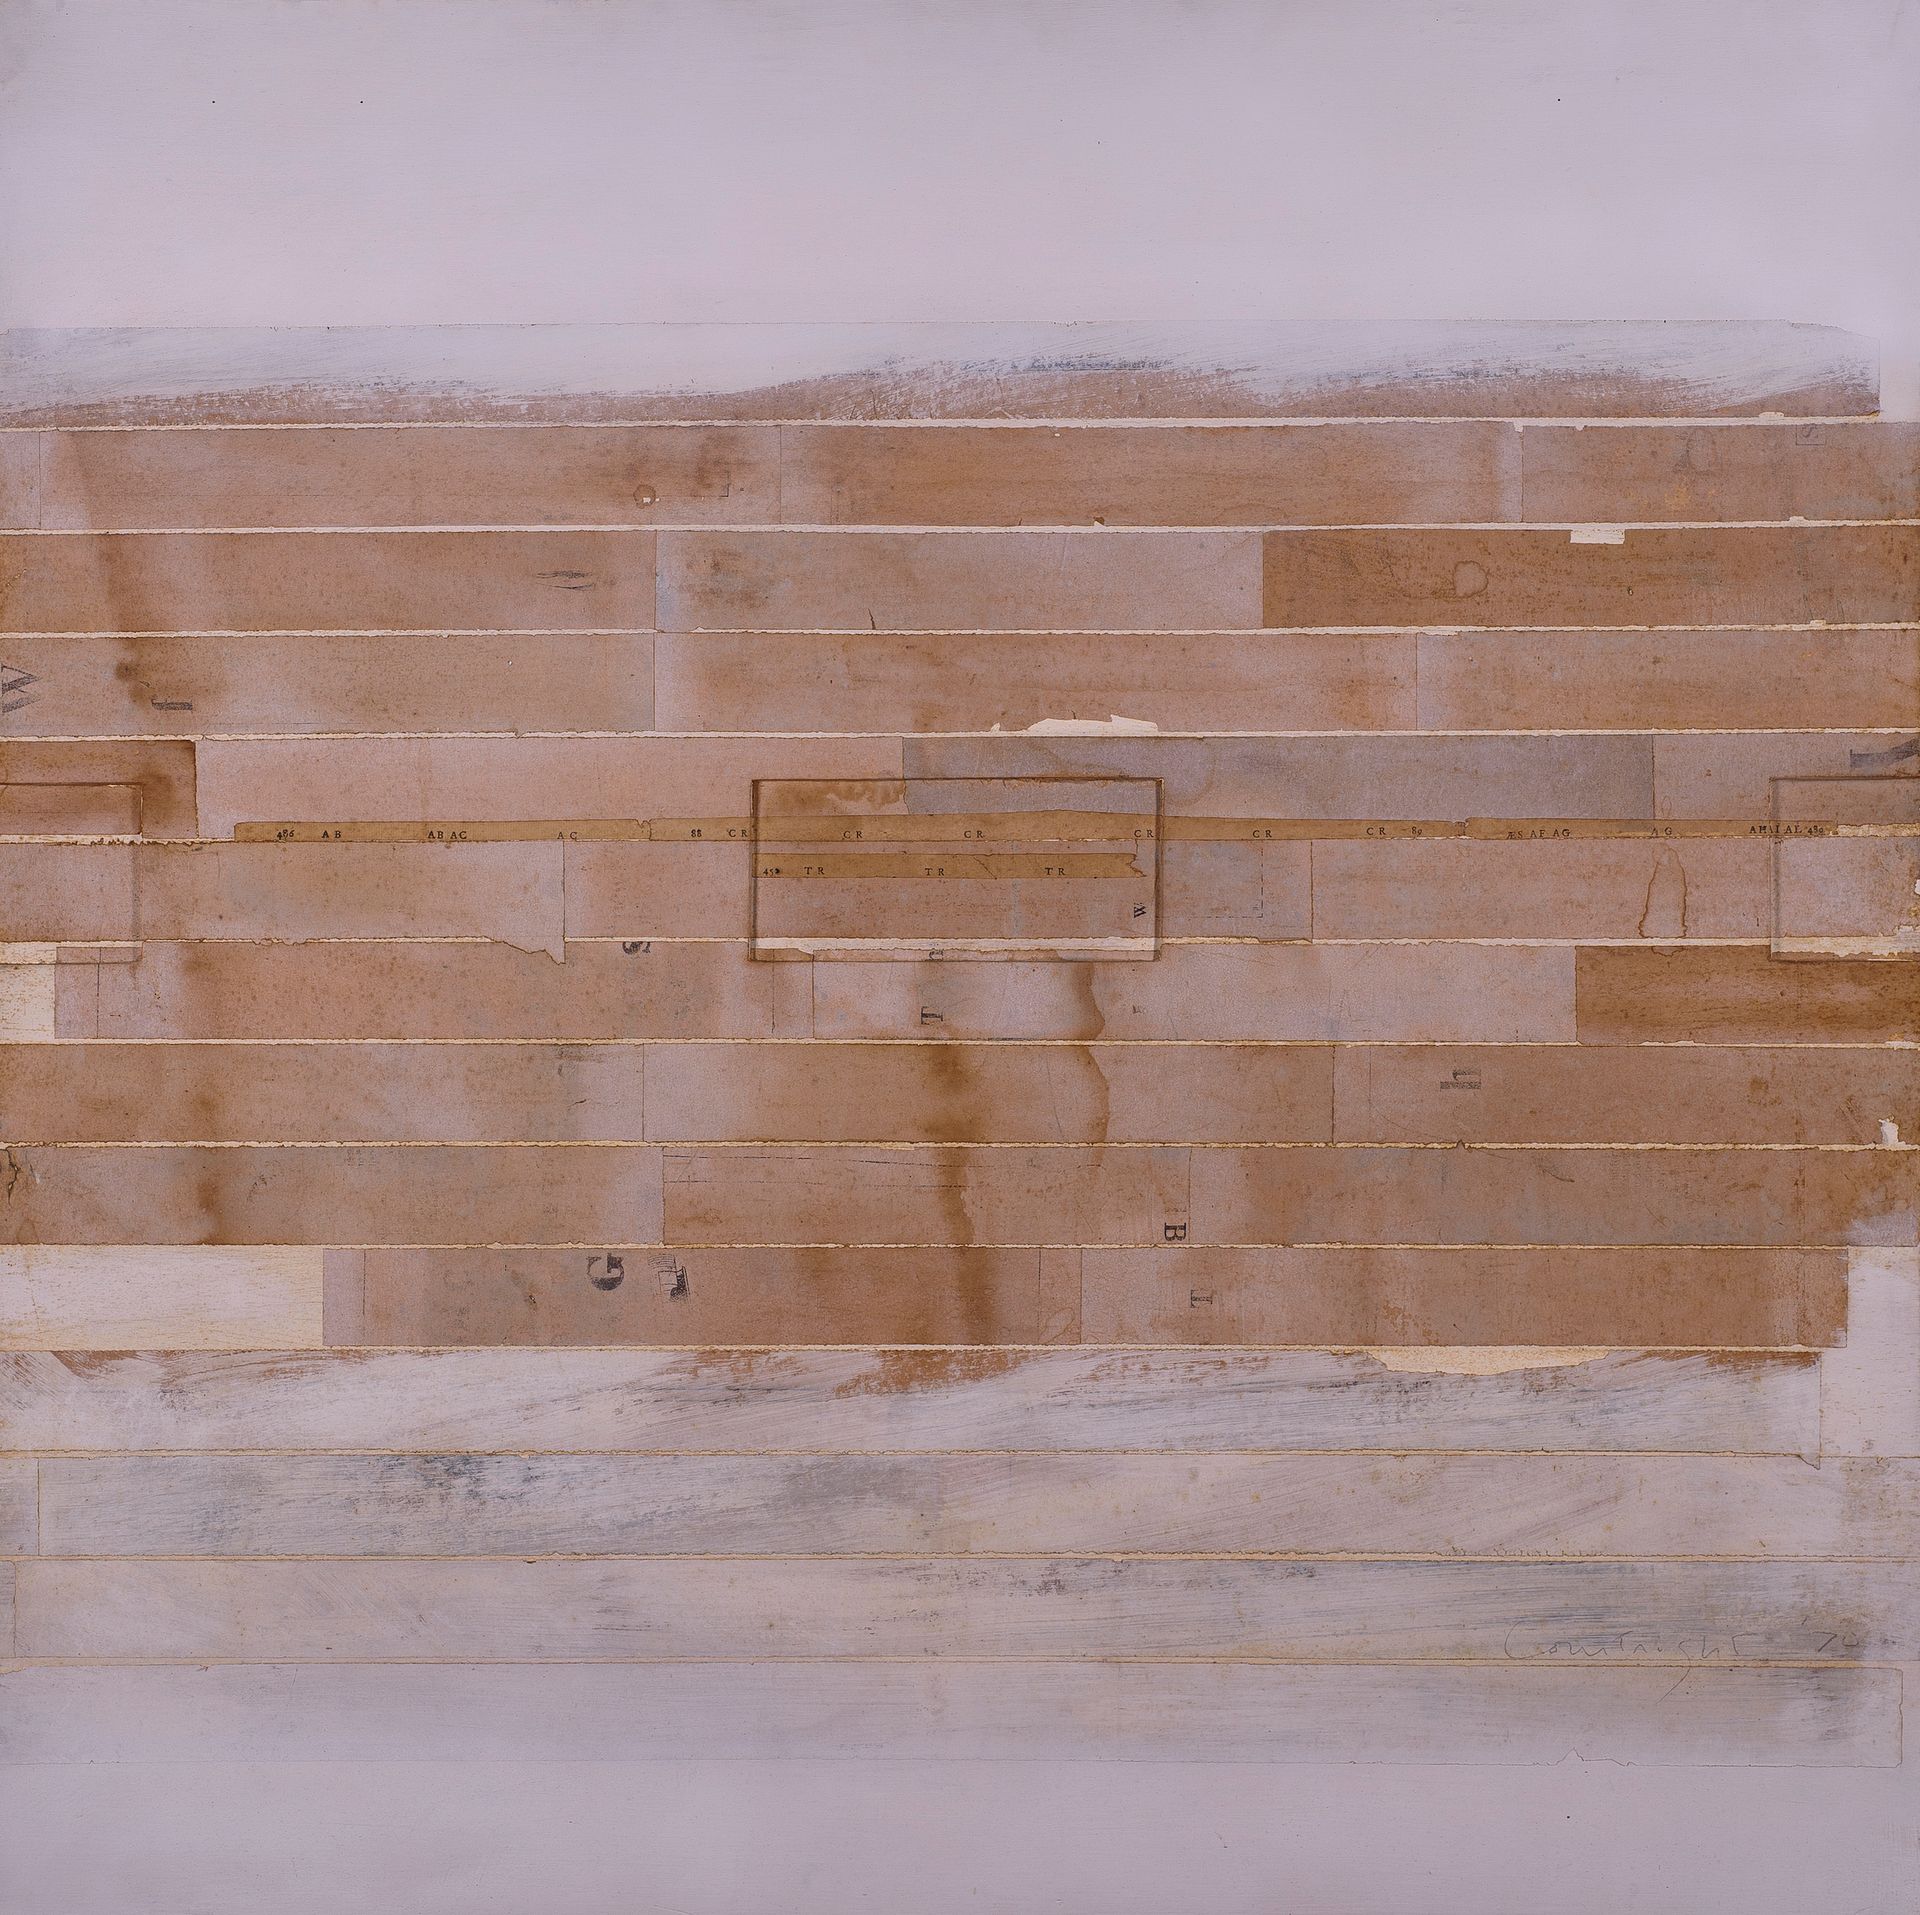 Null 罗伯特-库里特 (1926-2012)

无题》，1970年

混合媒体和拼贴在组装的木板上，右下方有签名和日期 90 x 90 cm